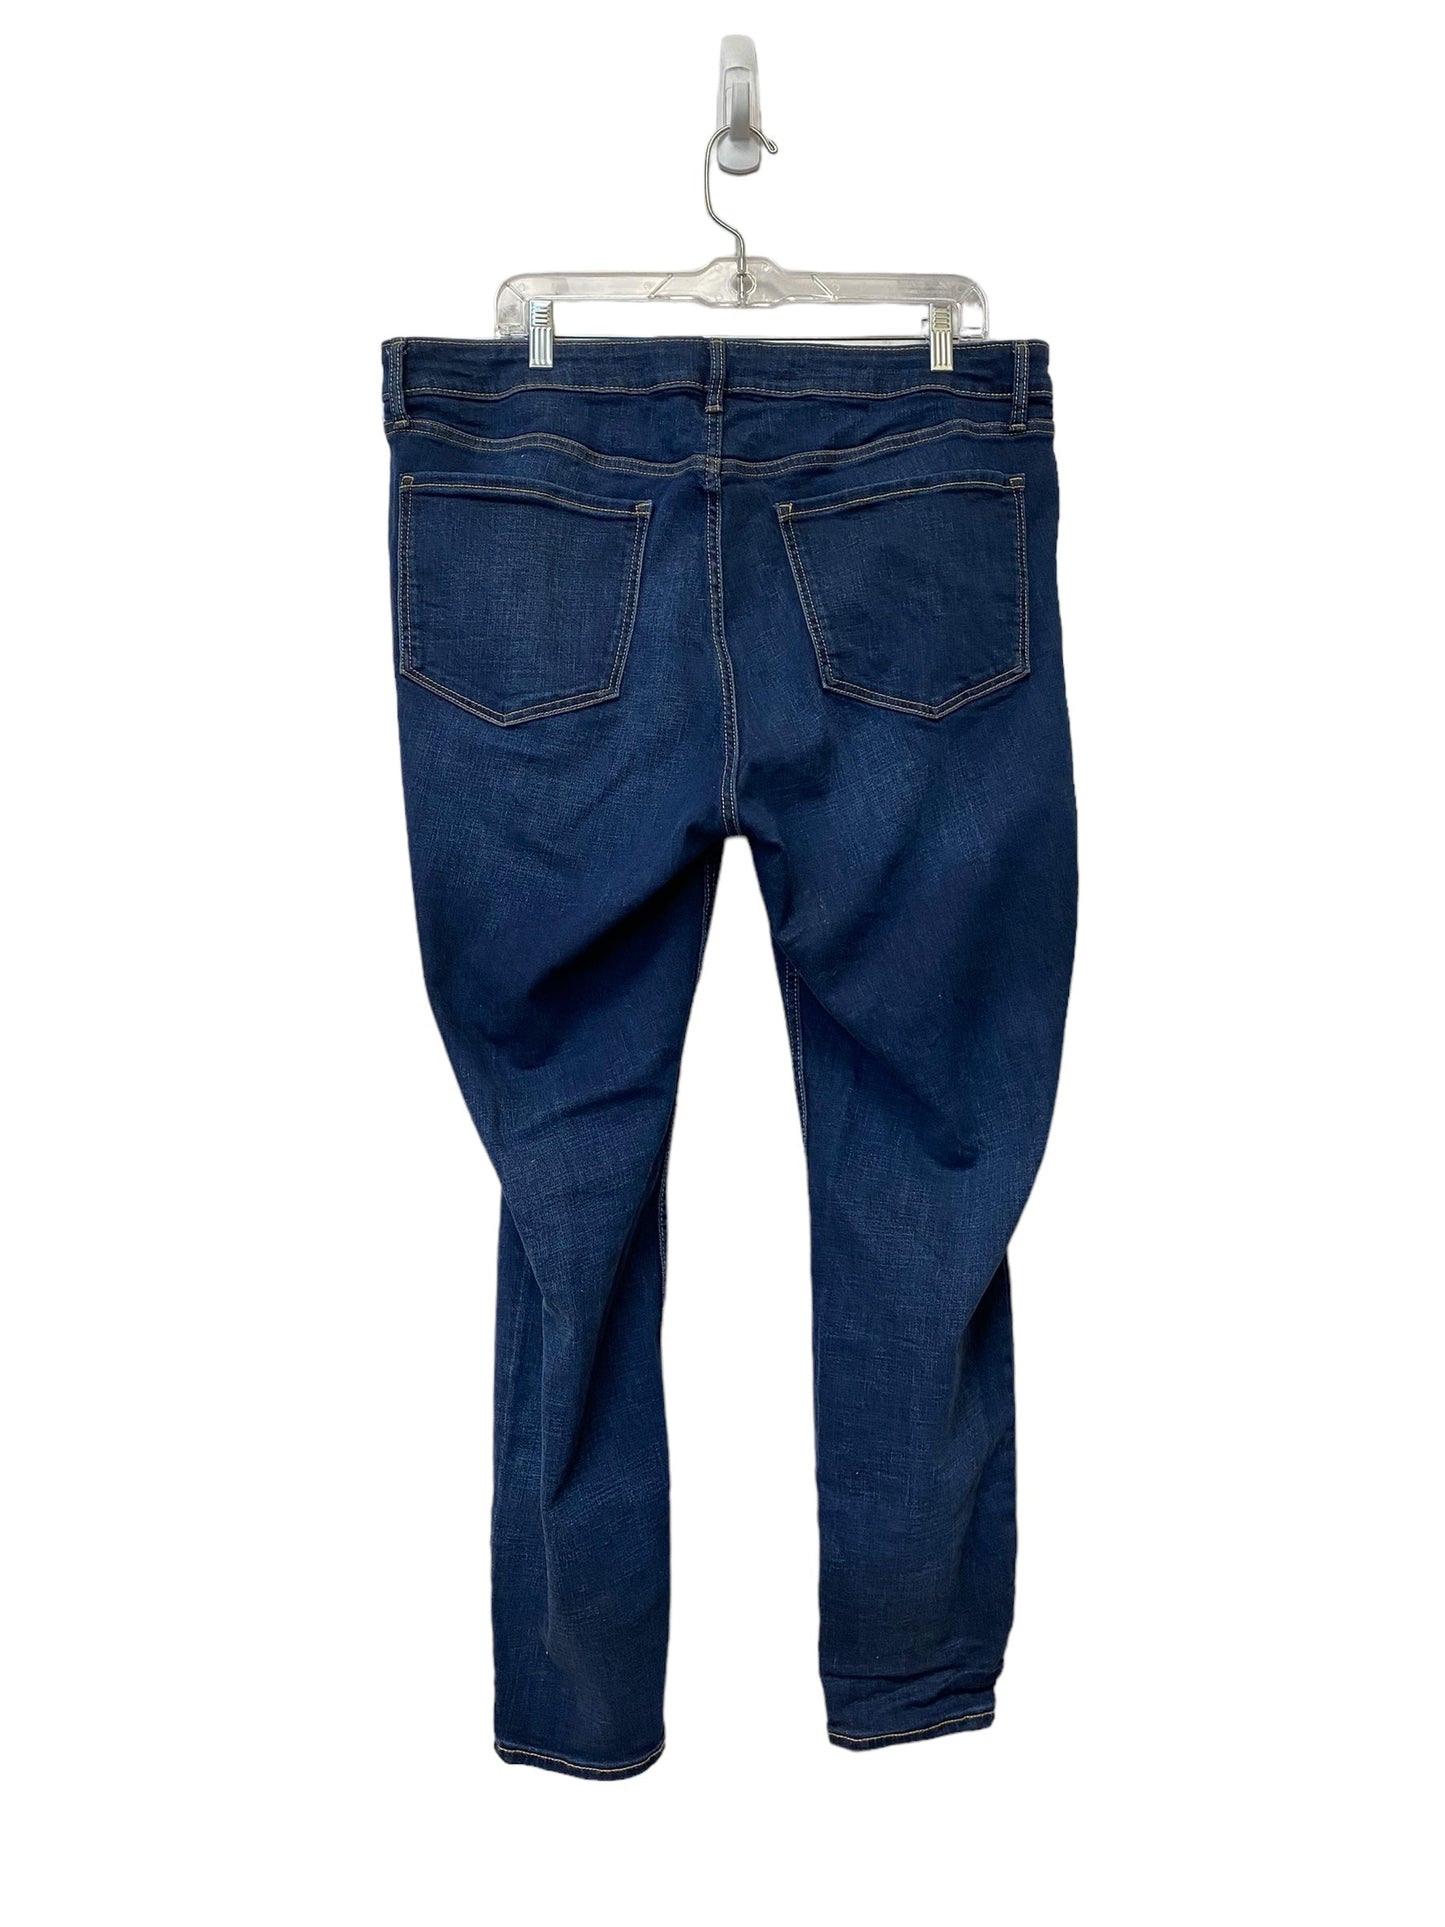 Blue Jeans Skinny Old Navy, Size 18